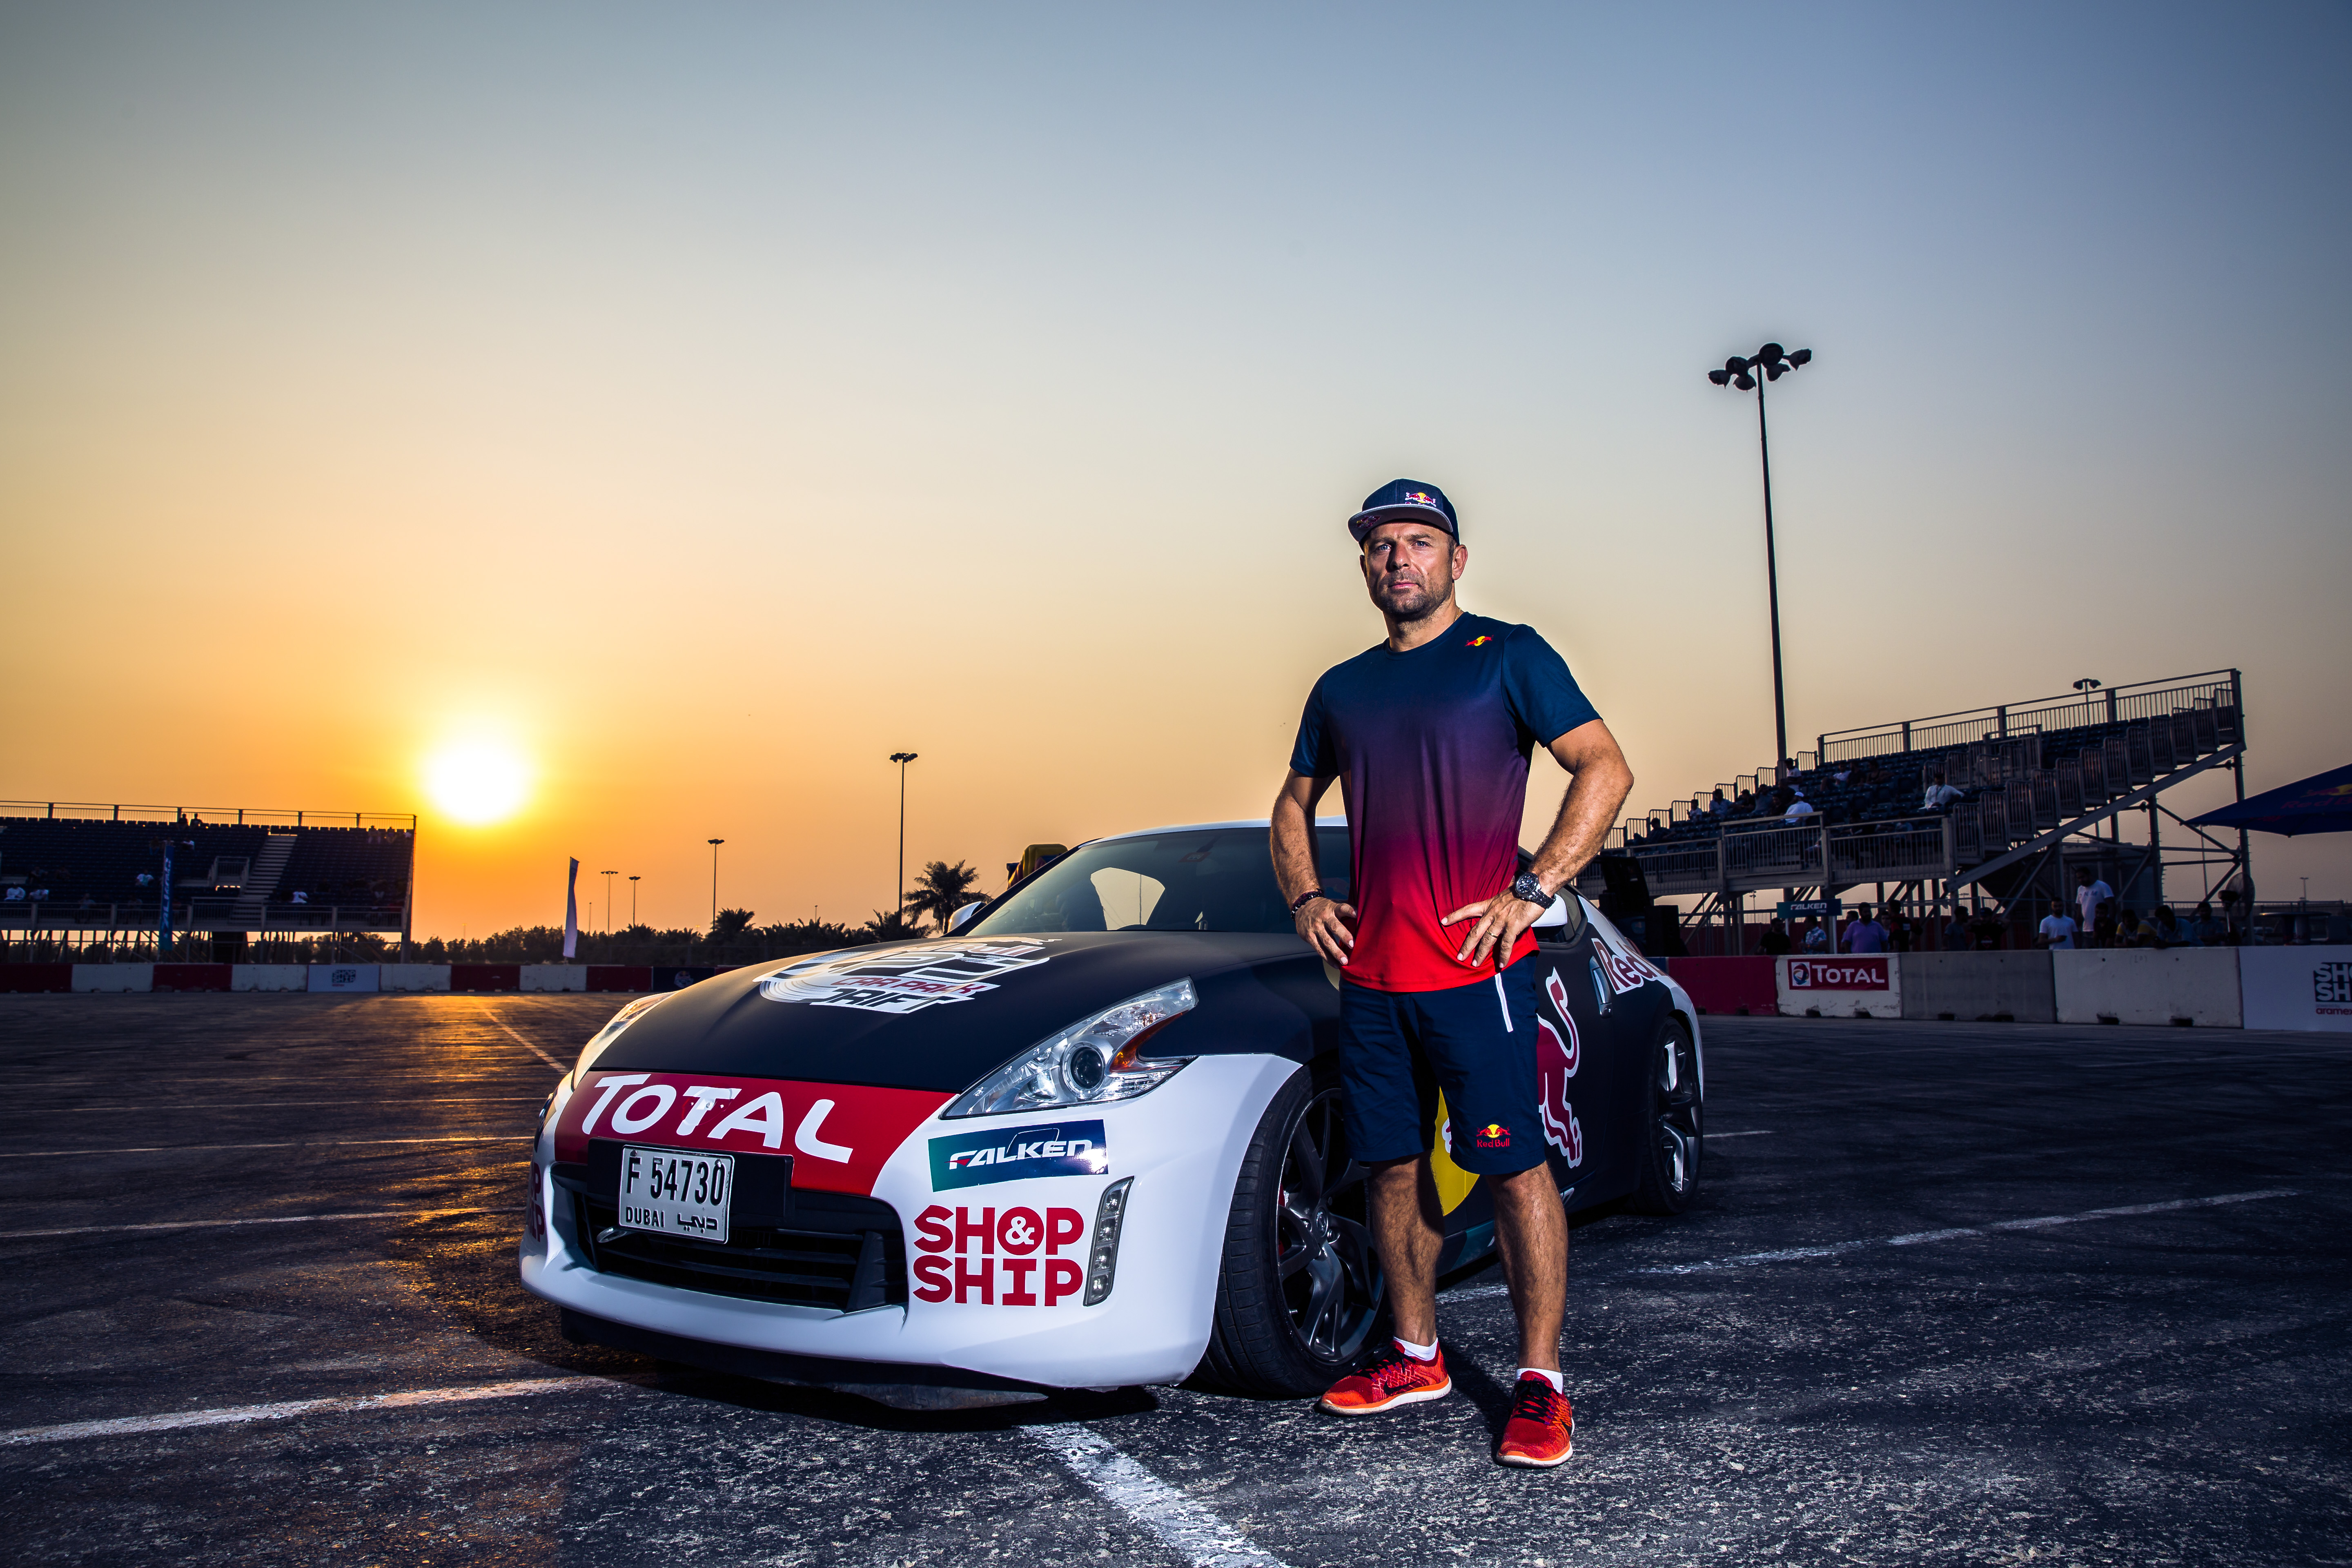 Red Bull Car Park Drift Returns to Qatar